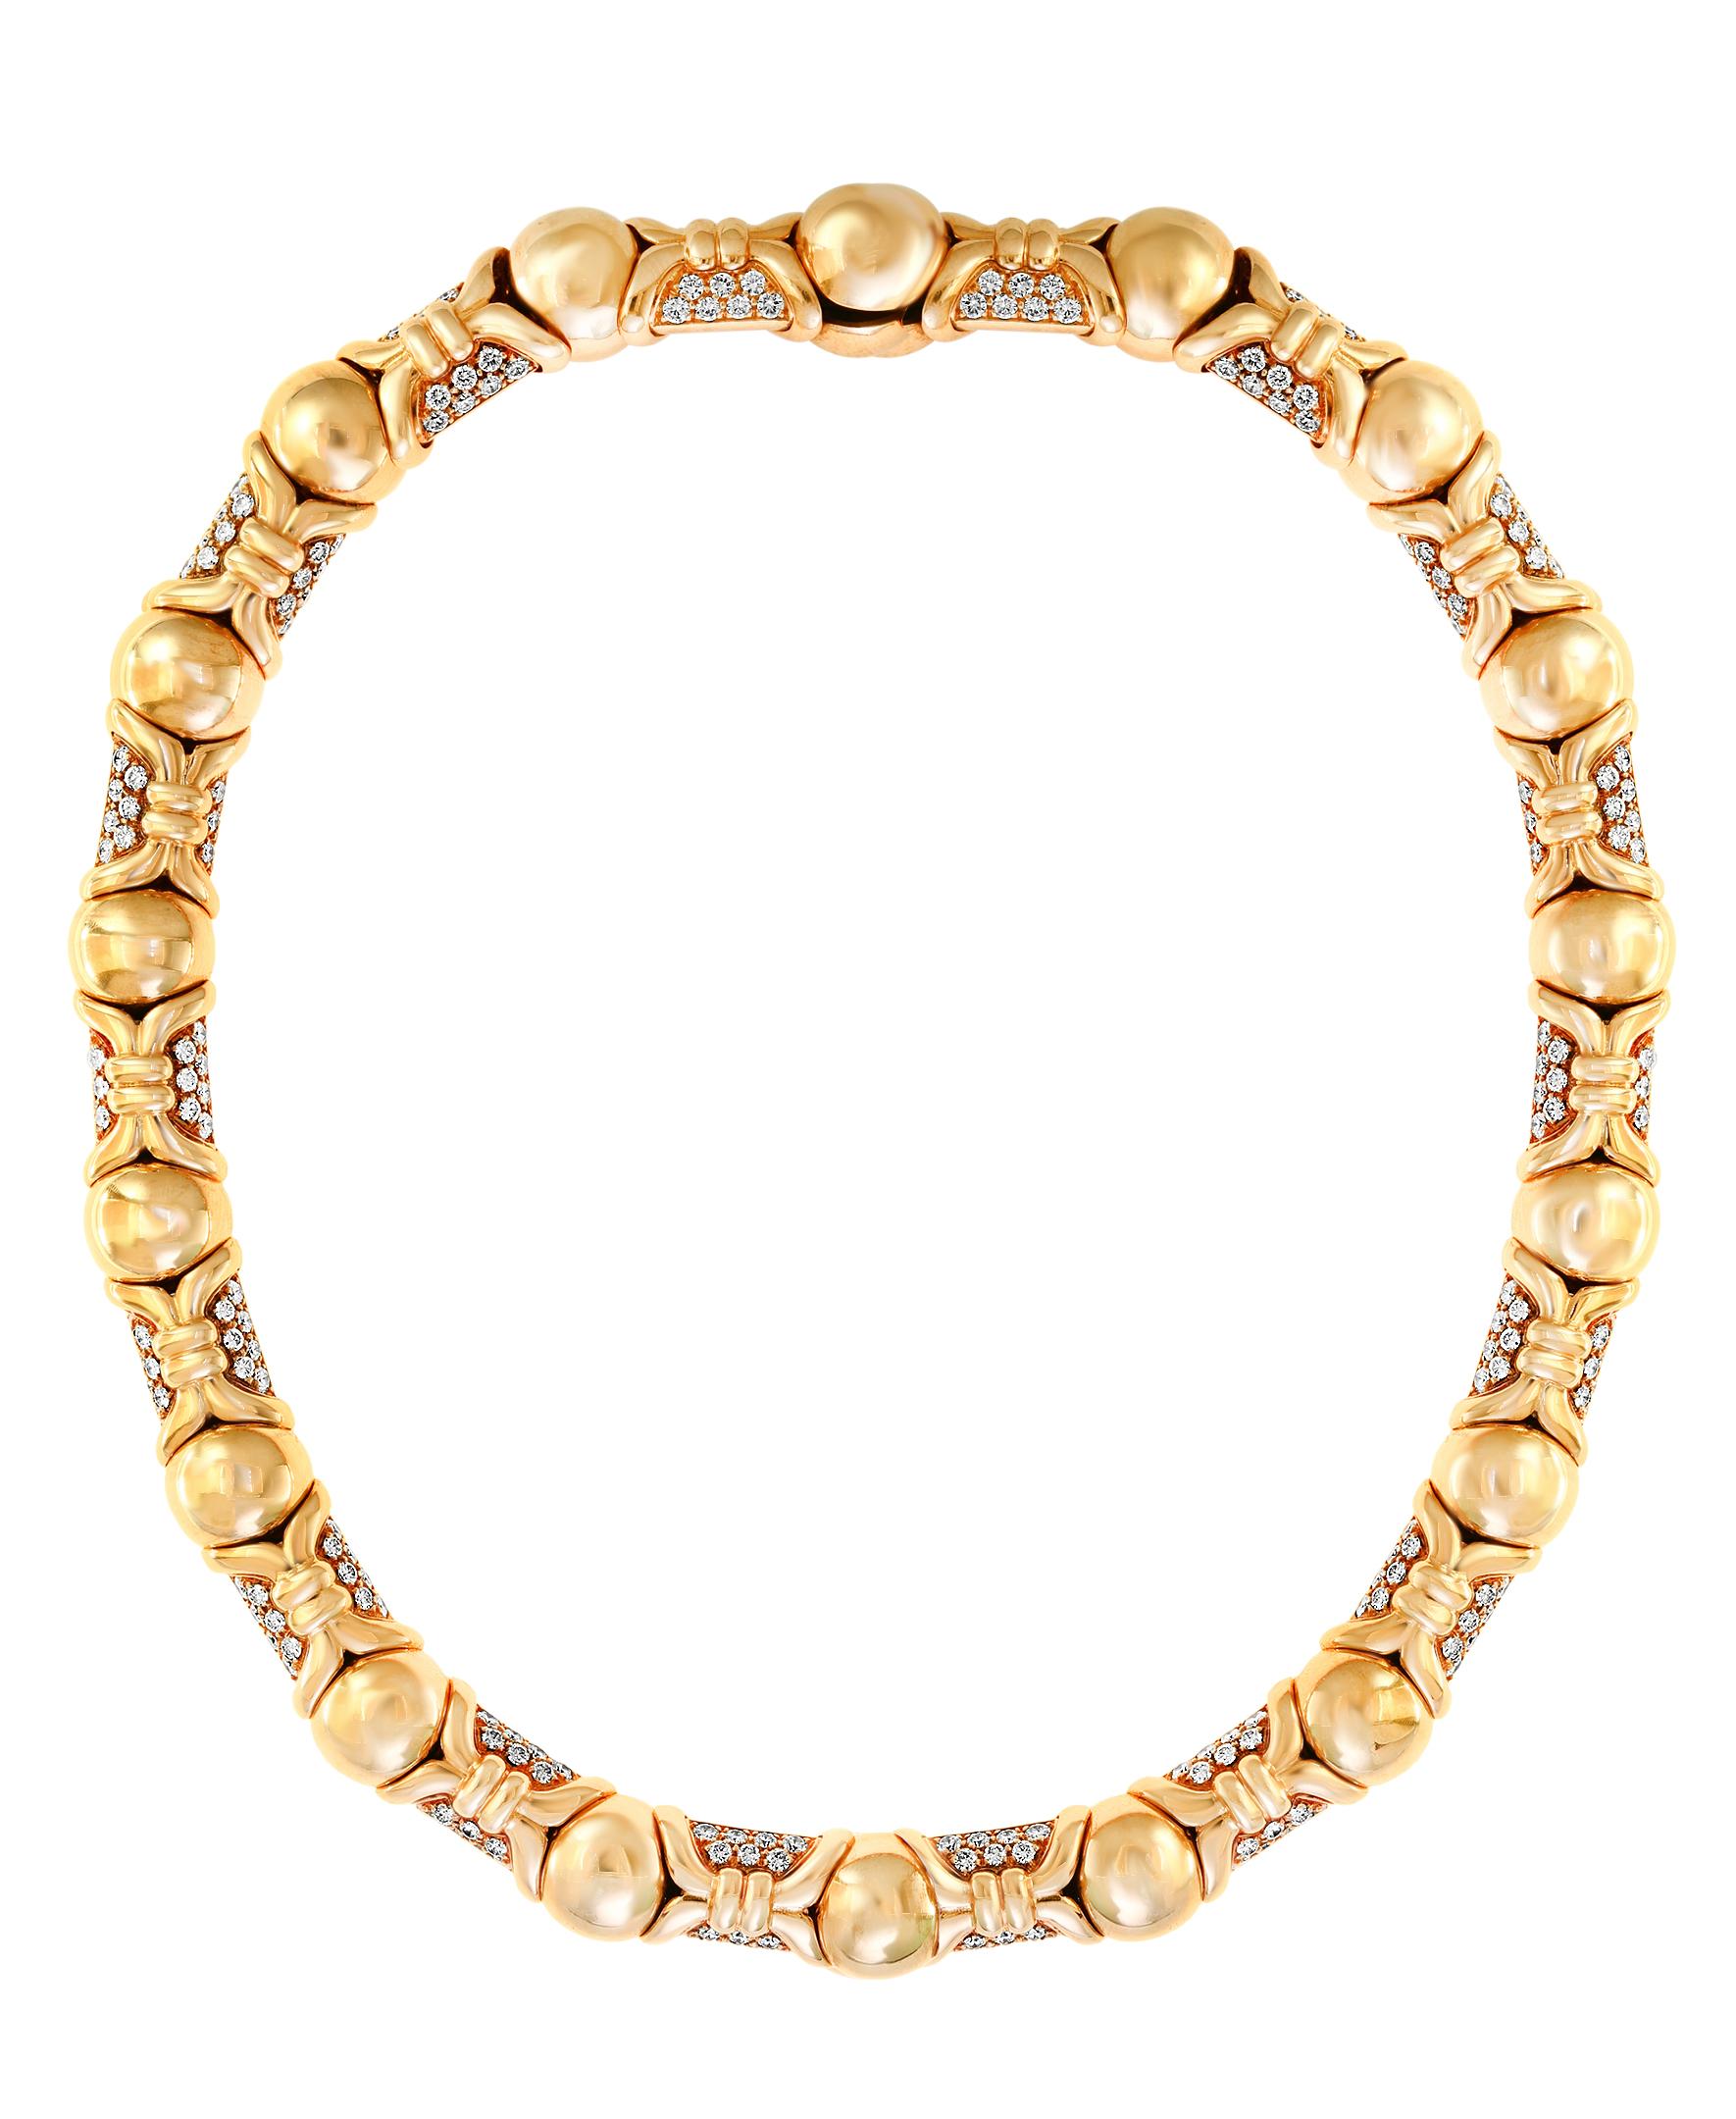 Bulgari Suite Necklace and Earrings in 18 Karat Gold and 12 Carat Diamonds 1